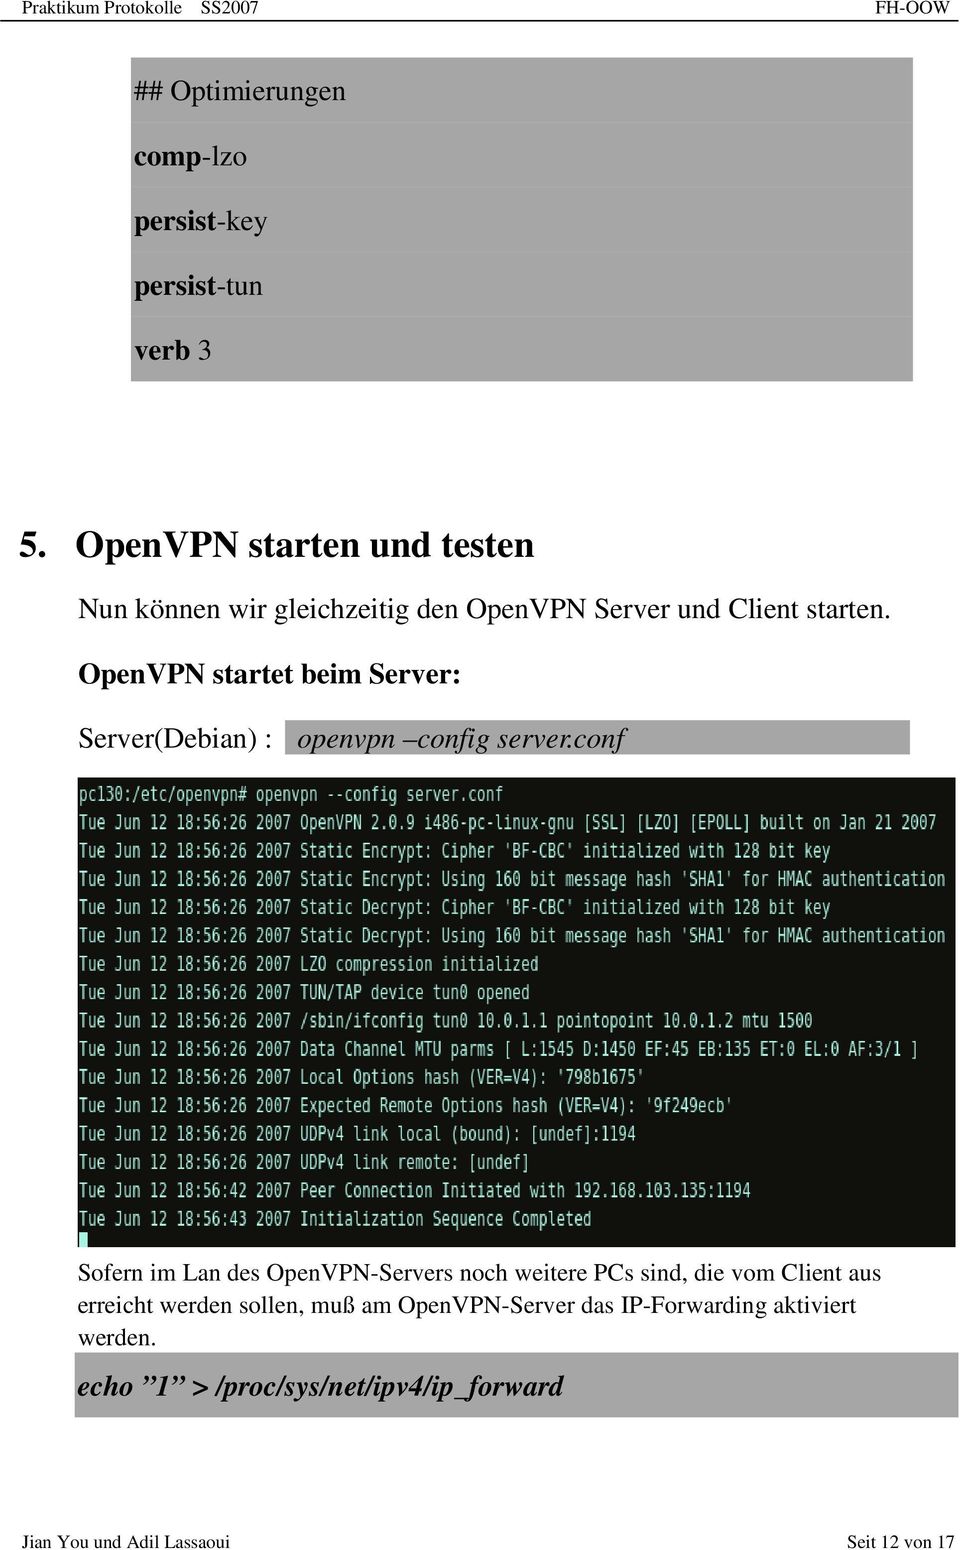 OpenVPN startet beim Server: Server(Debian) : openvpn config server.